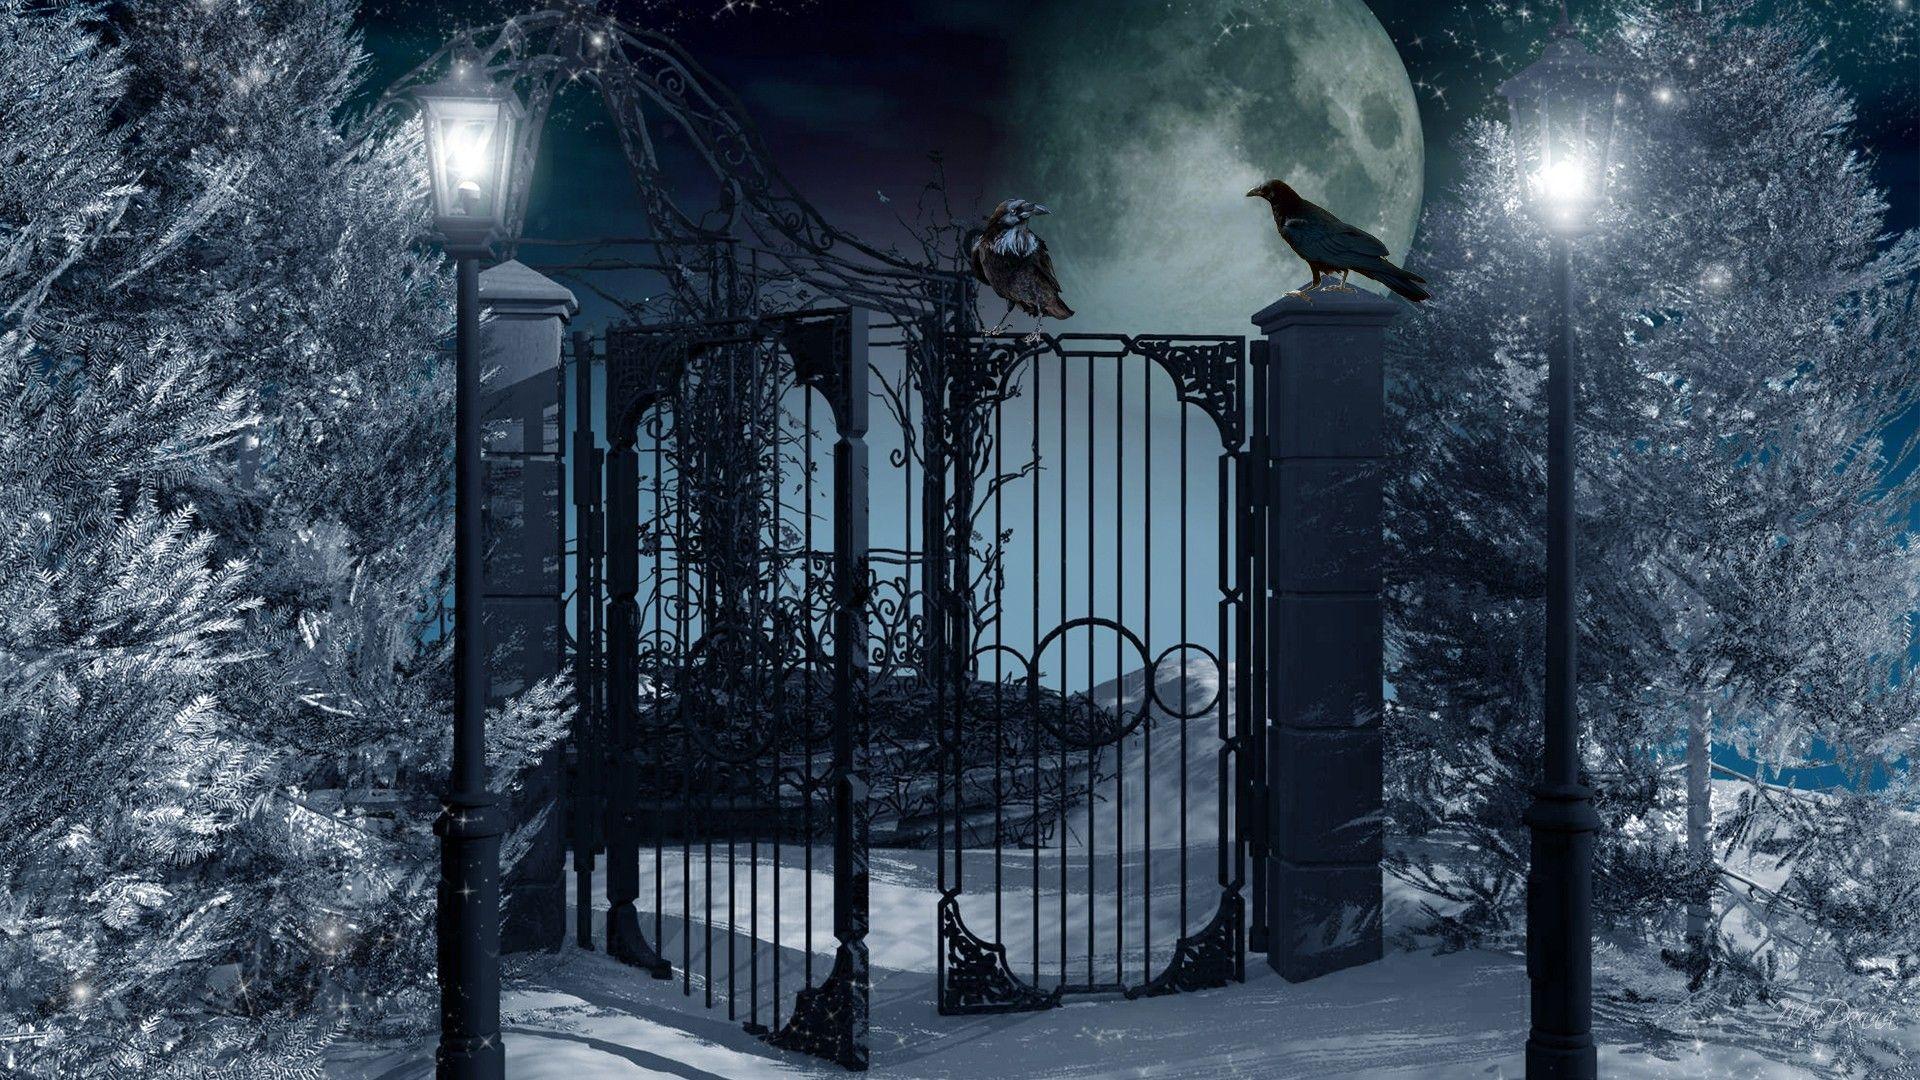 Full Moon on Winter Night HD Wallpaper. Background Image